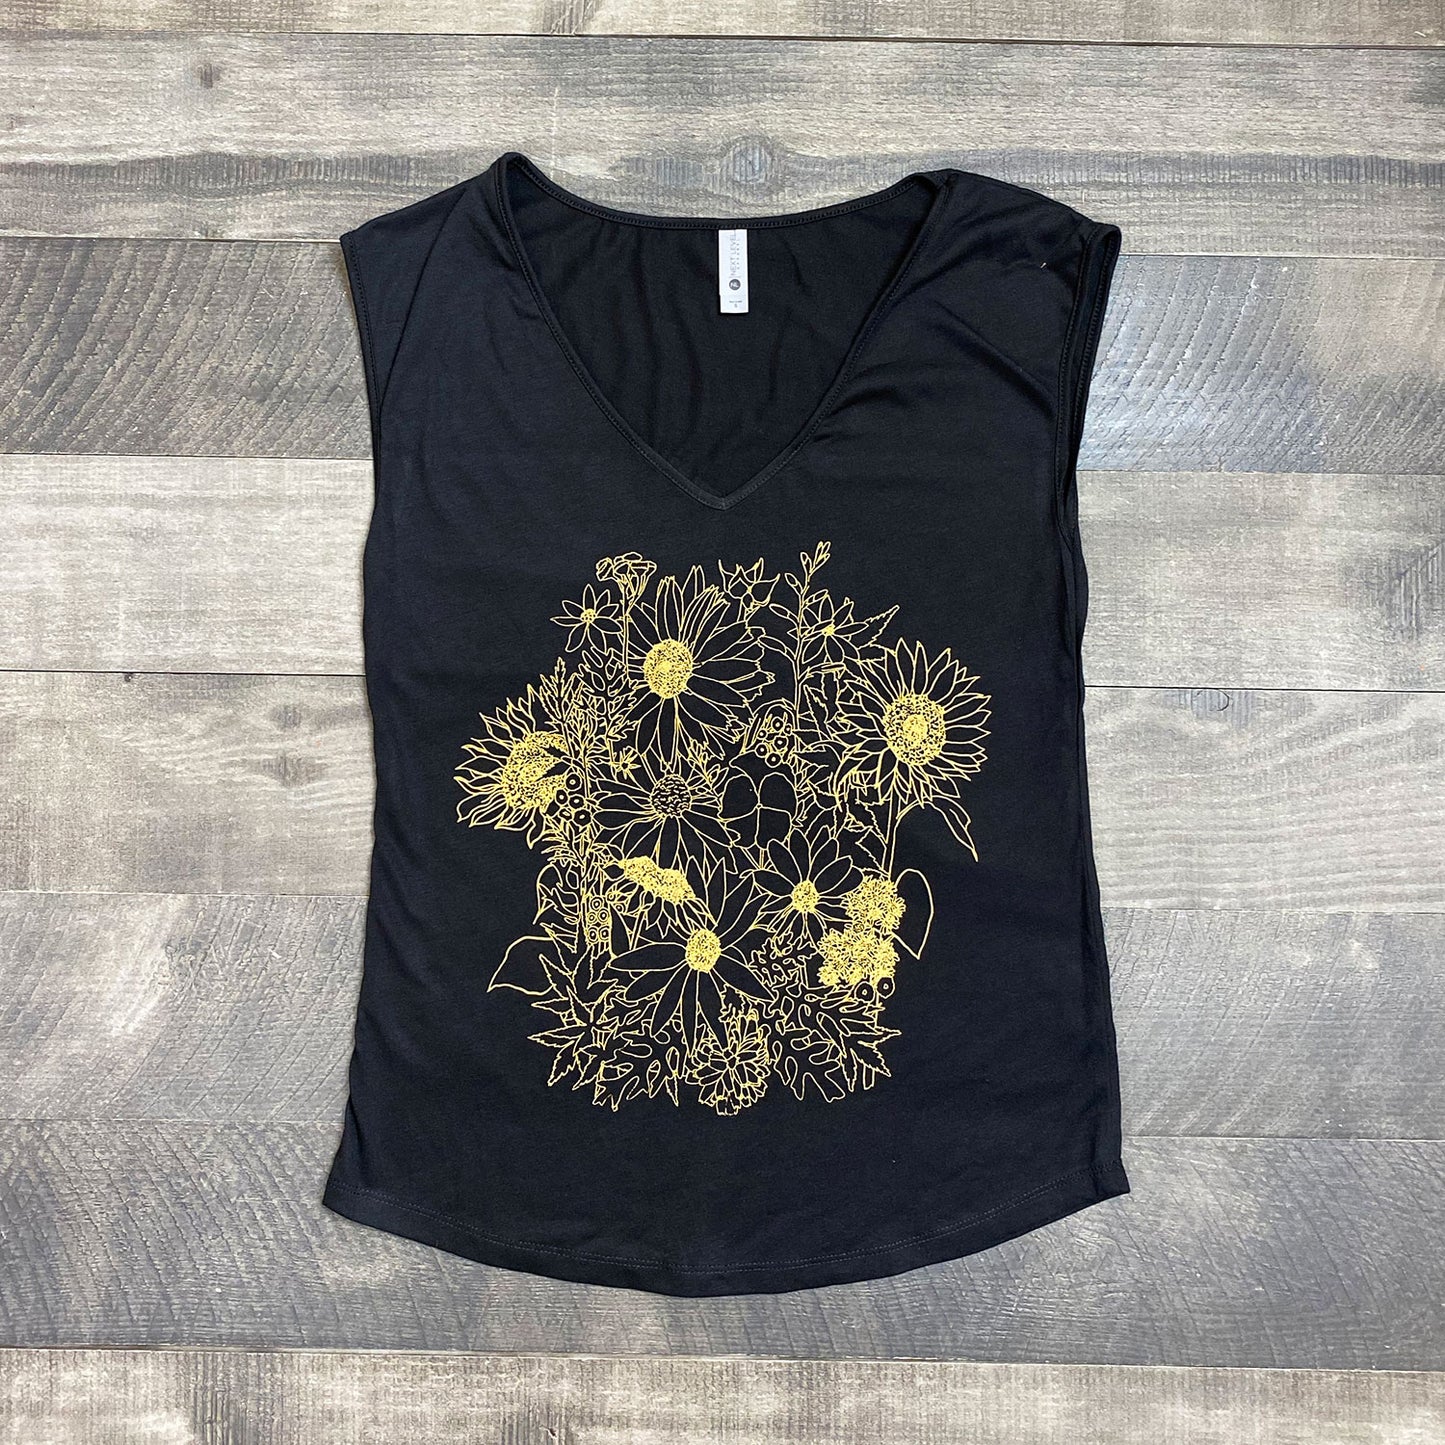 Sunflowers hand printed botanical top